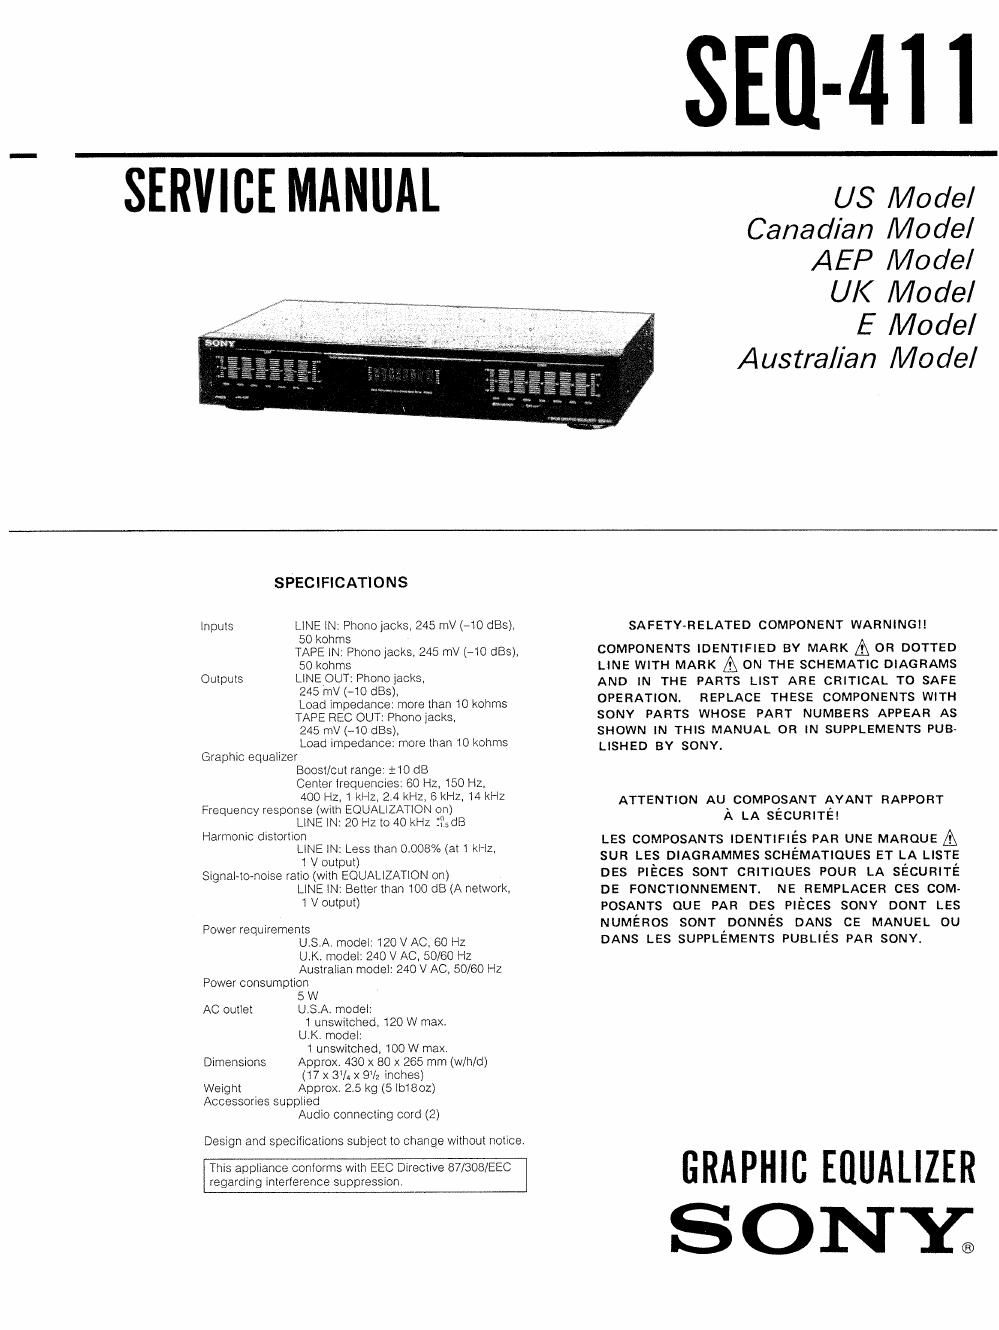 sony seq 411 service manual